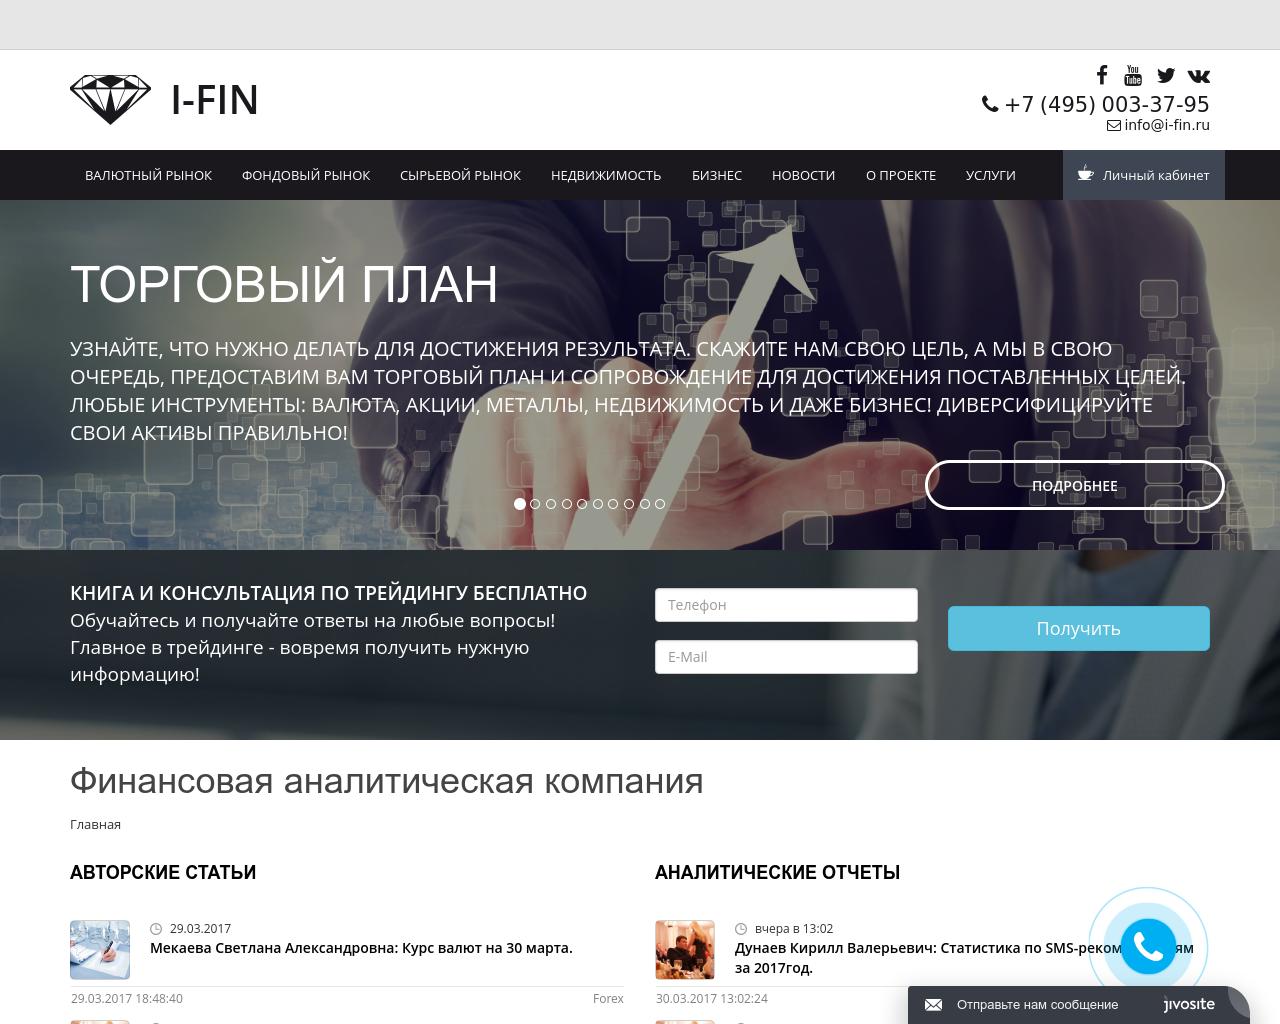 Изображение сайта i-fin.ru в разрешении 1280x1024